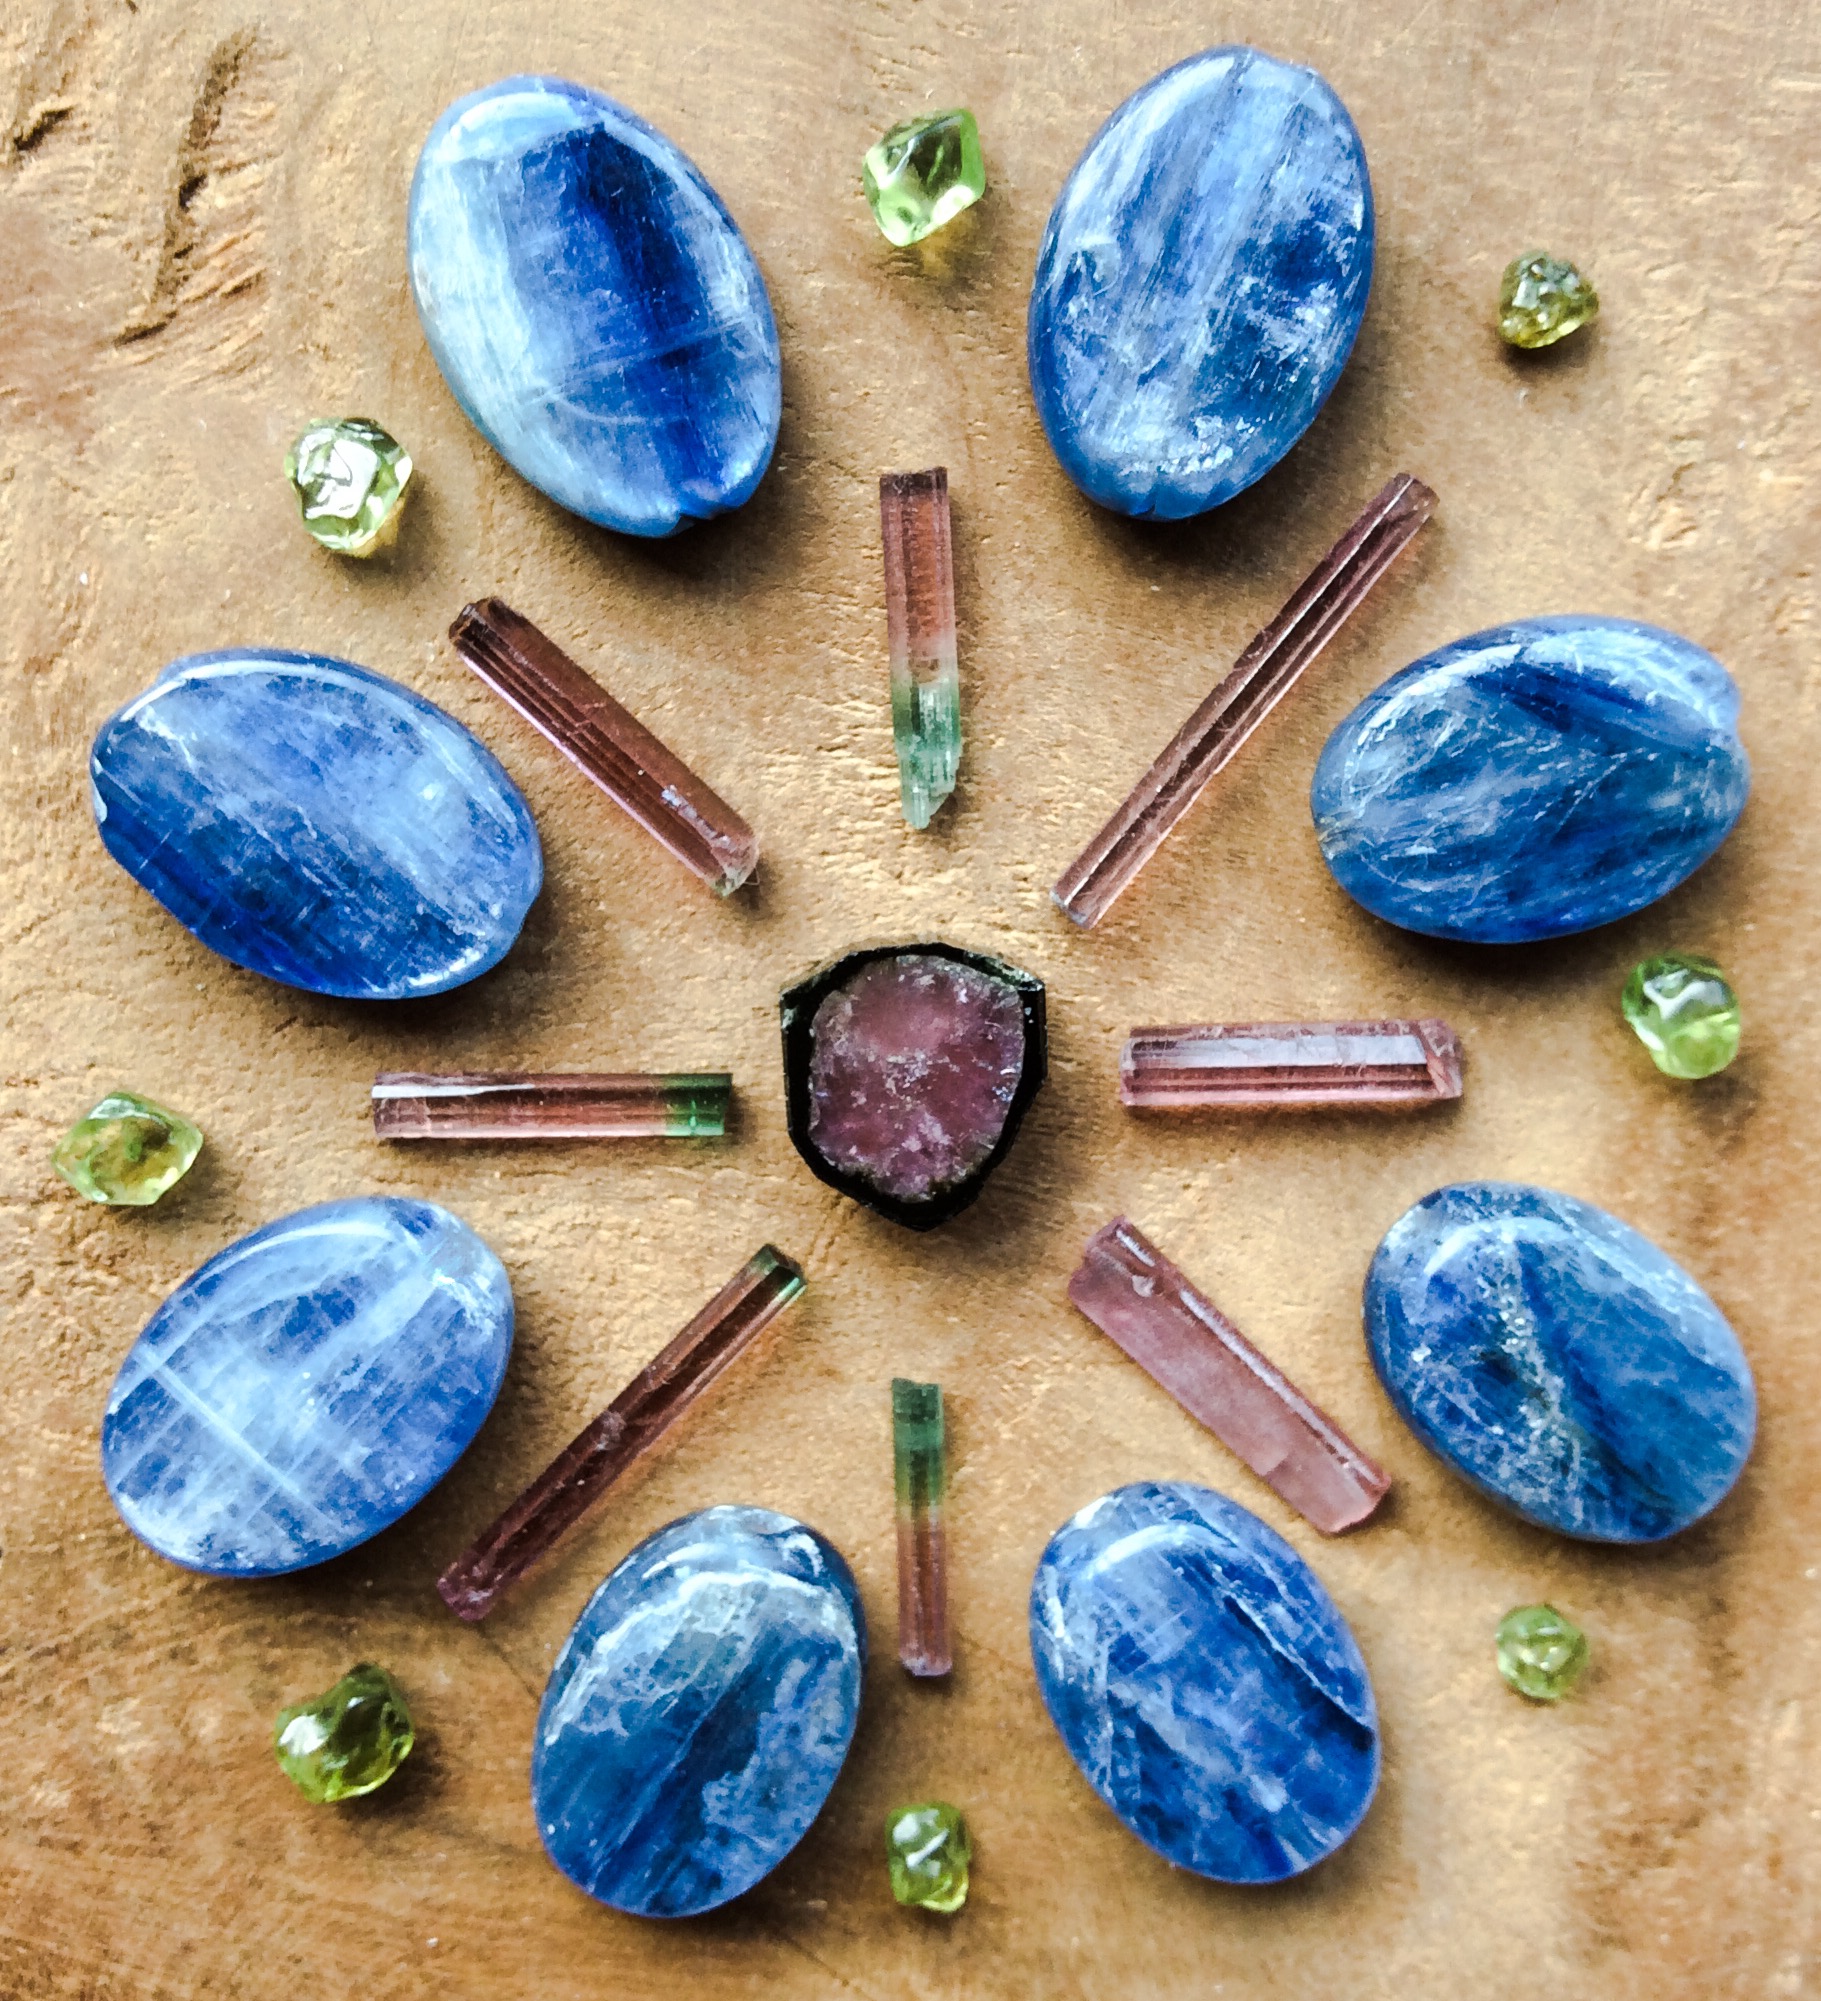 Watermelon Tourmaline, Bi-color Tourmaline, Kyanite and Peridot Crystal Grid